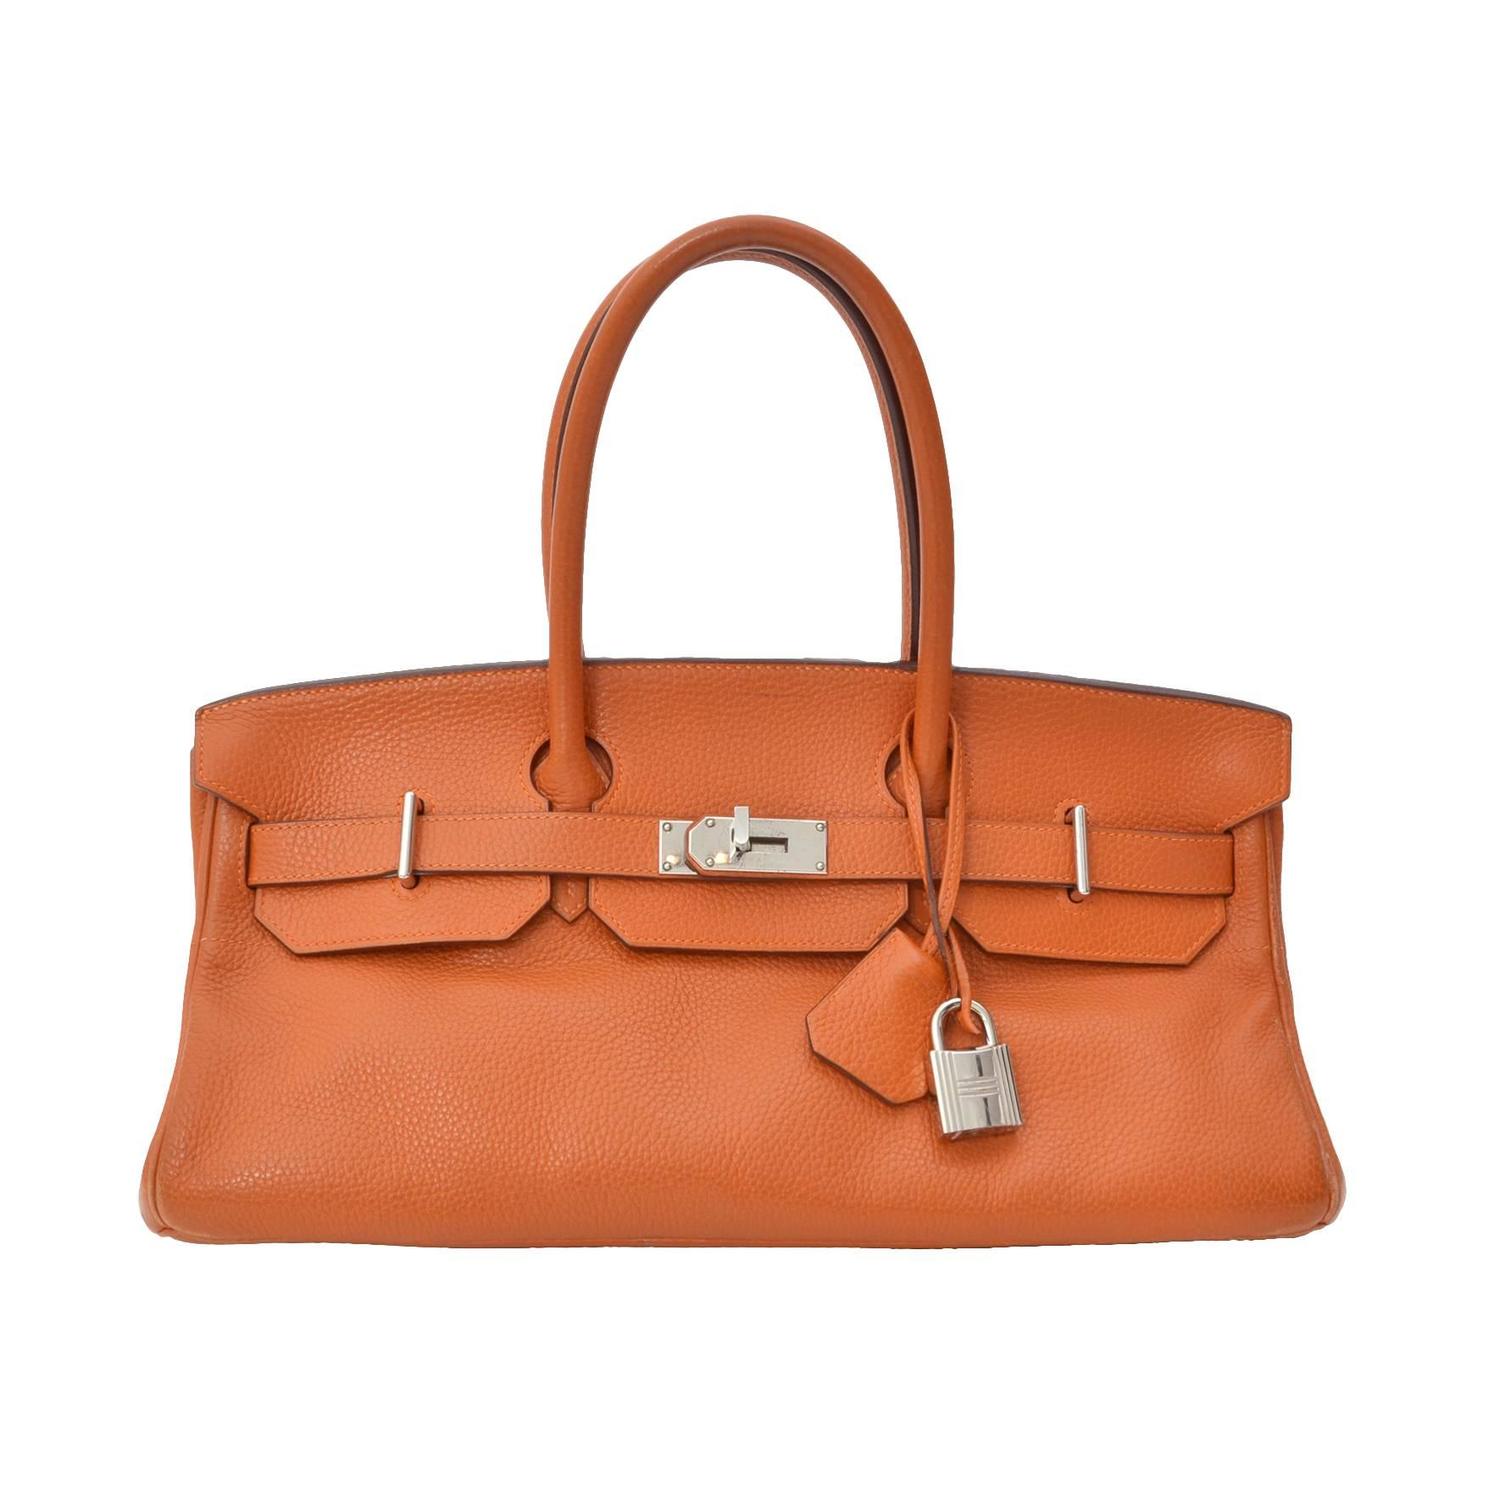 Hermes Birkin Bag Orange Price | IQS Executive